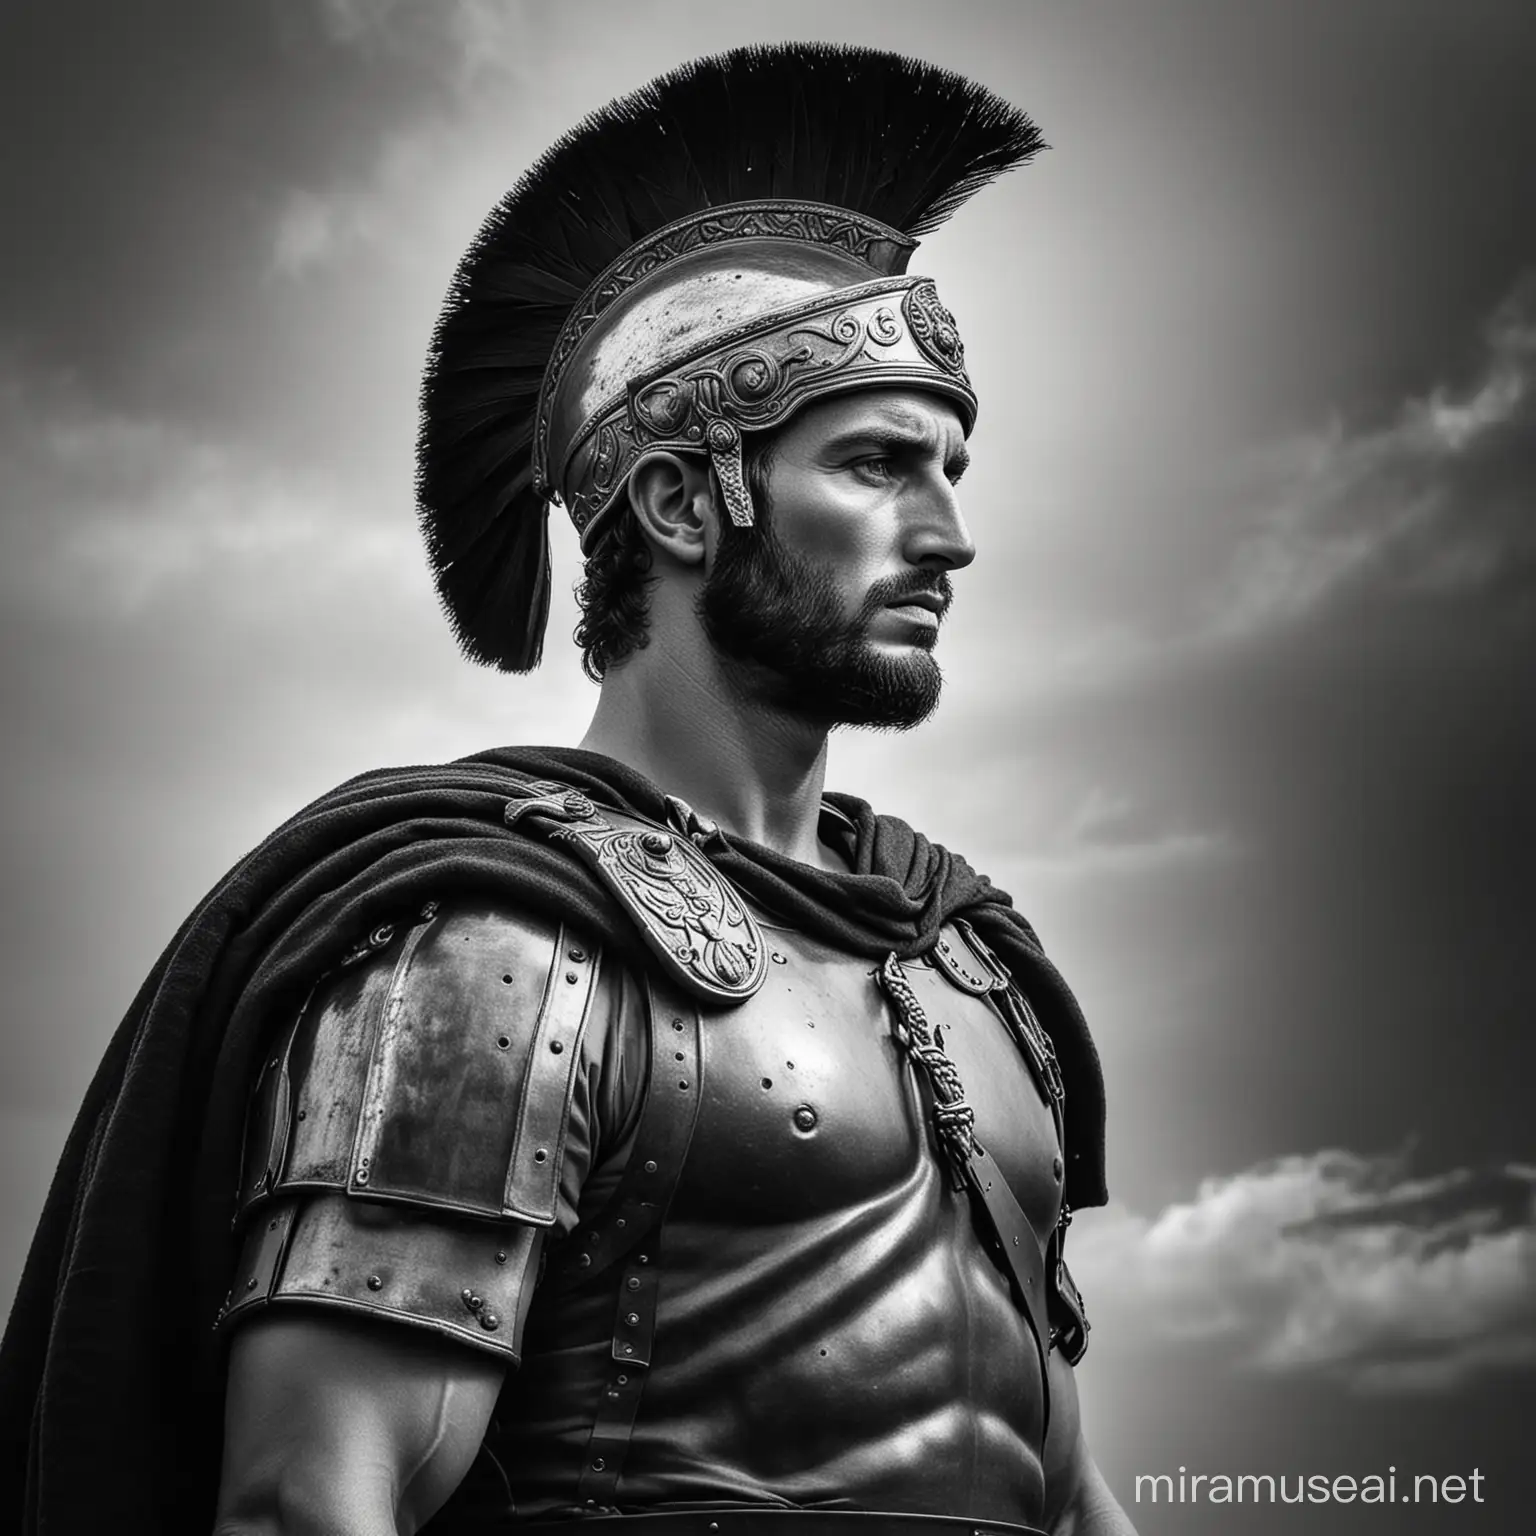 Majestic Roman Soldier in Black and White Artwork